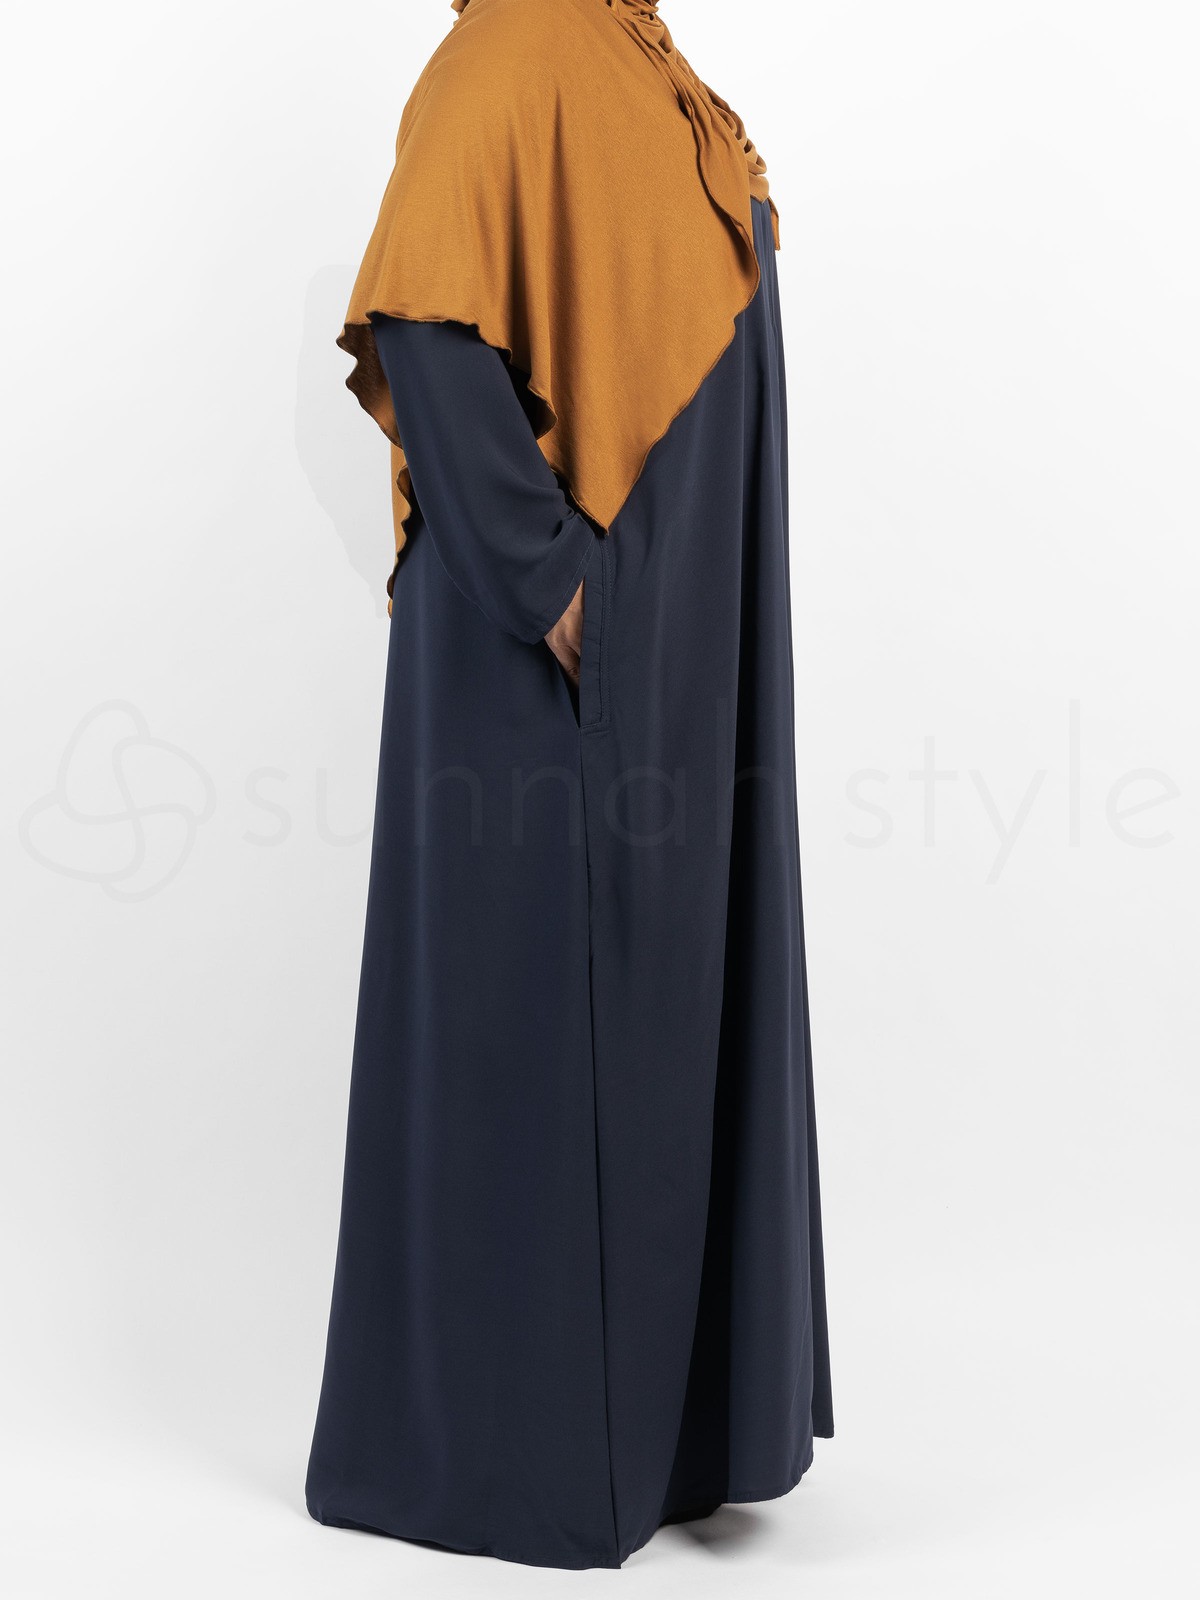 Sunnah Style - Plain Closed Abaya (Navy Blue)